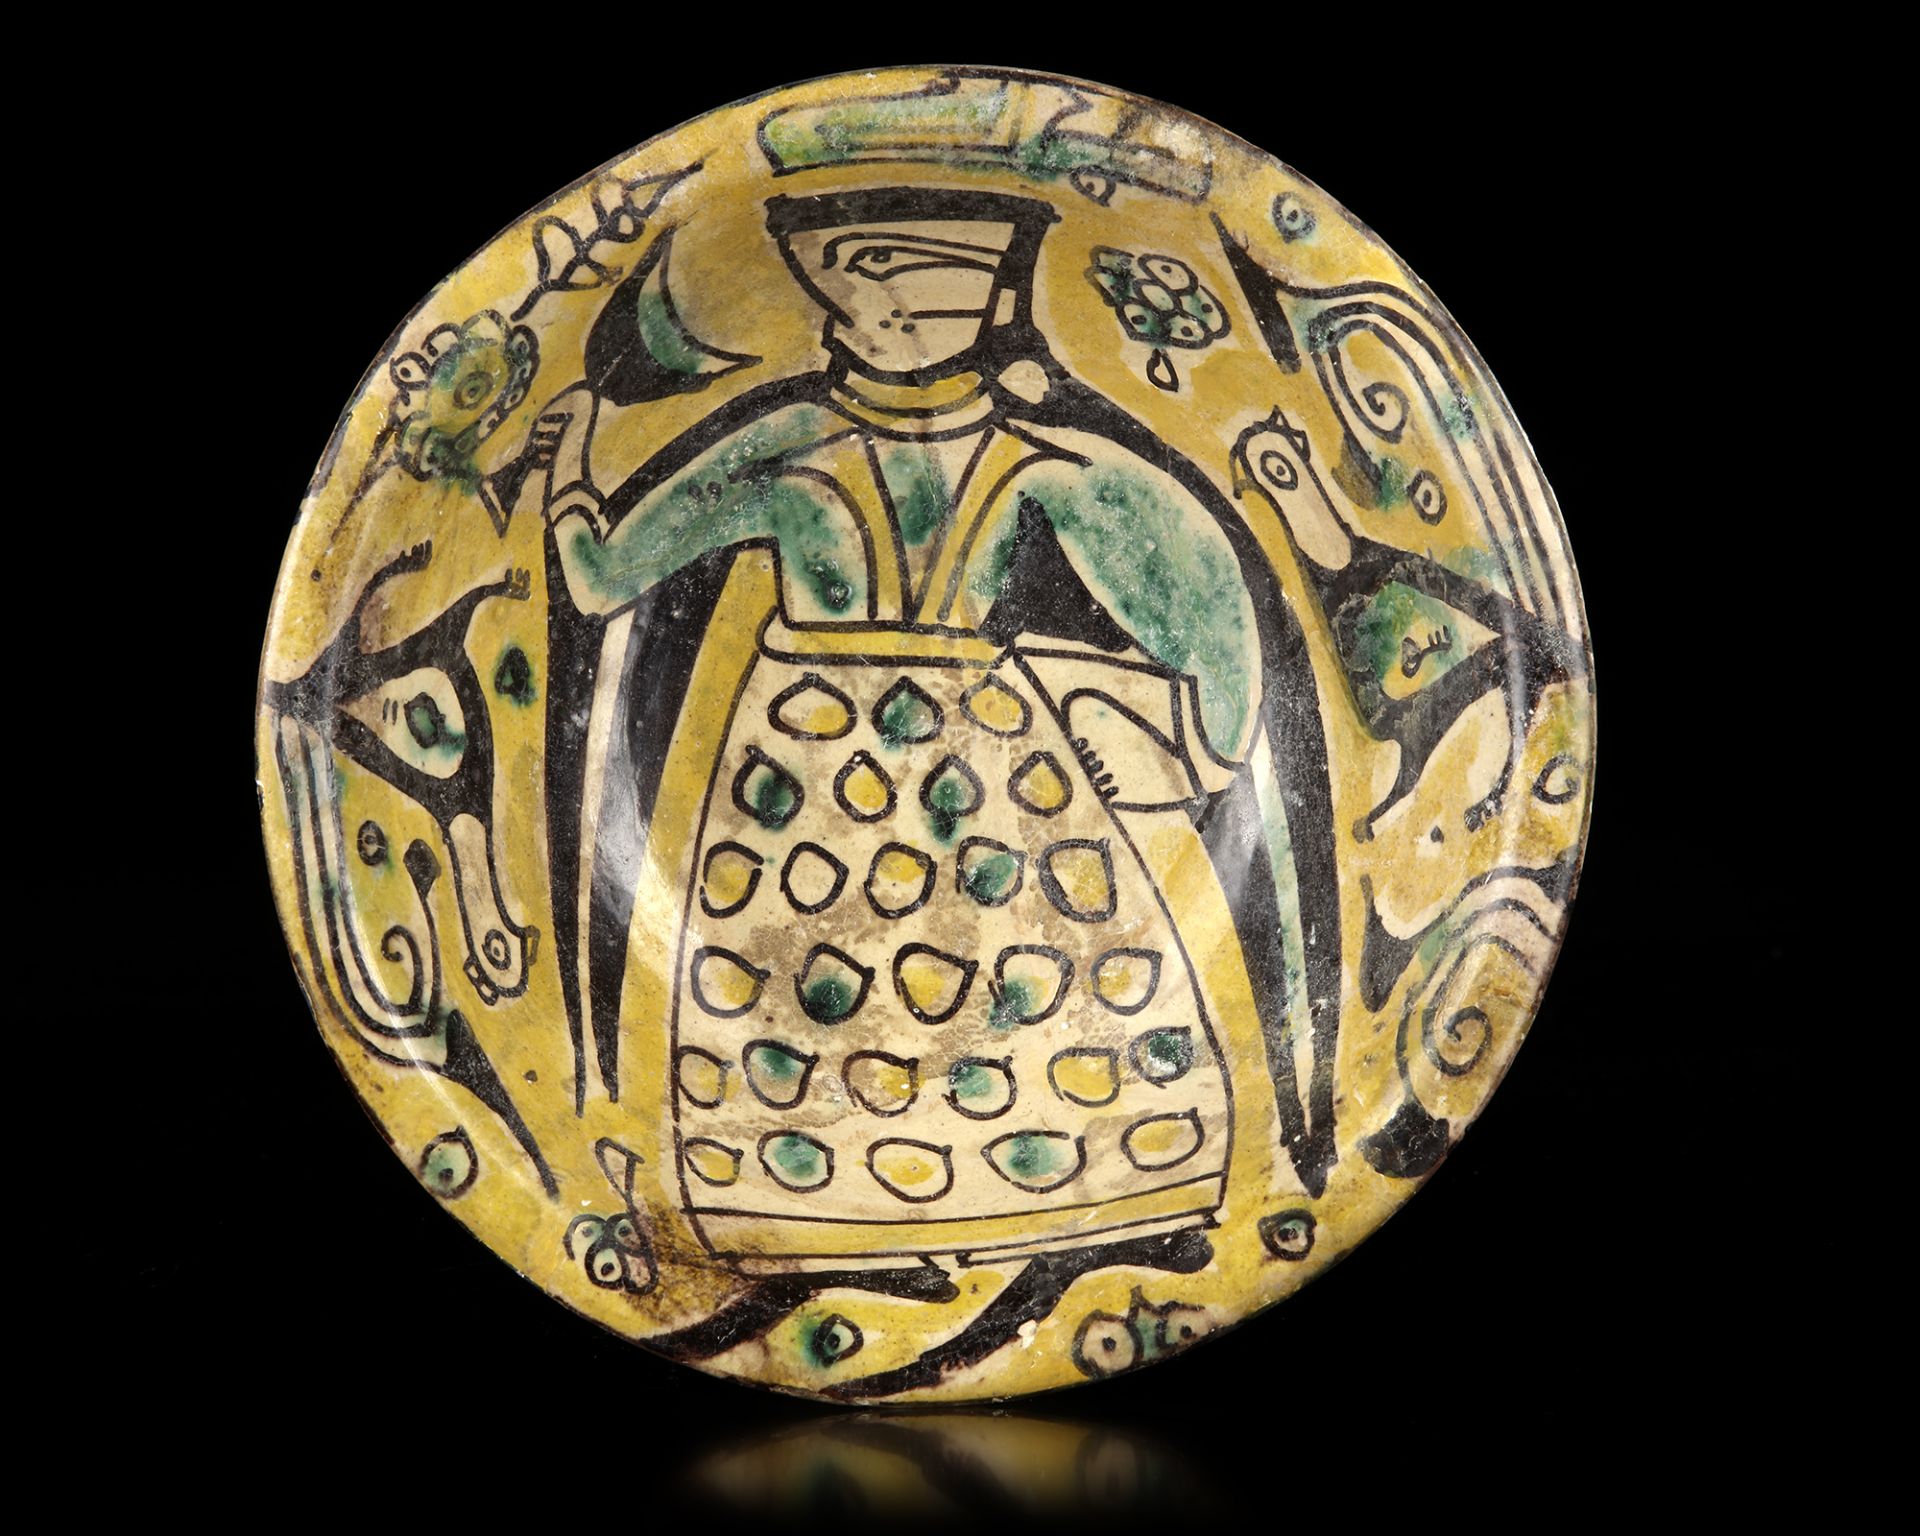 A NISHAPUR POLYCHROME DECORATED BOWL, PERSIA, 10TH CENTURY